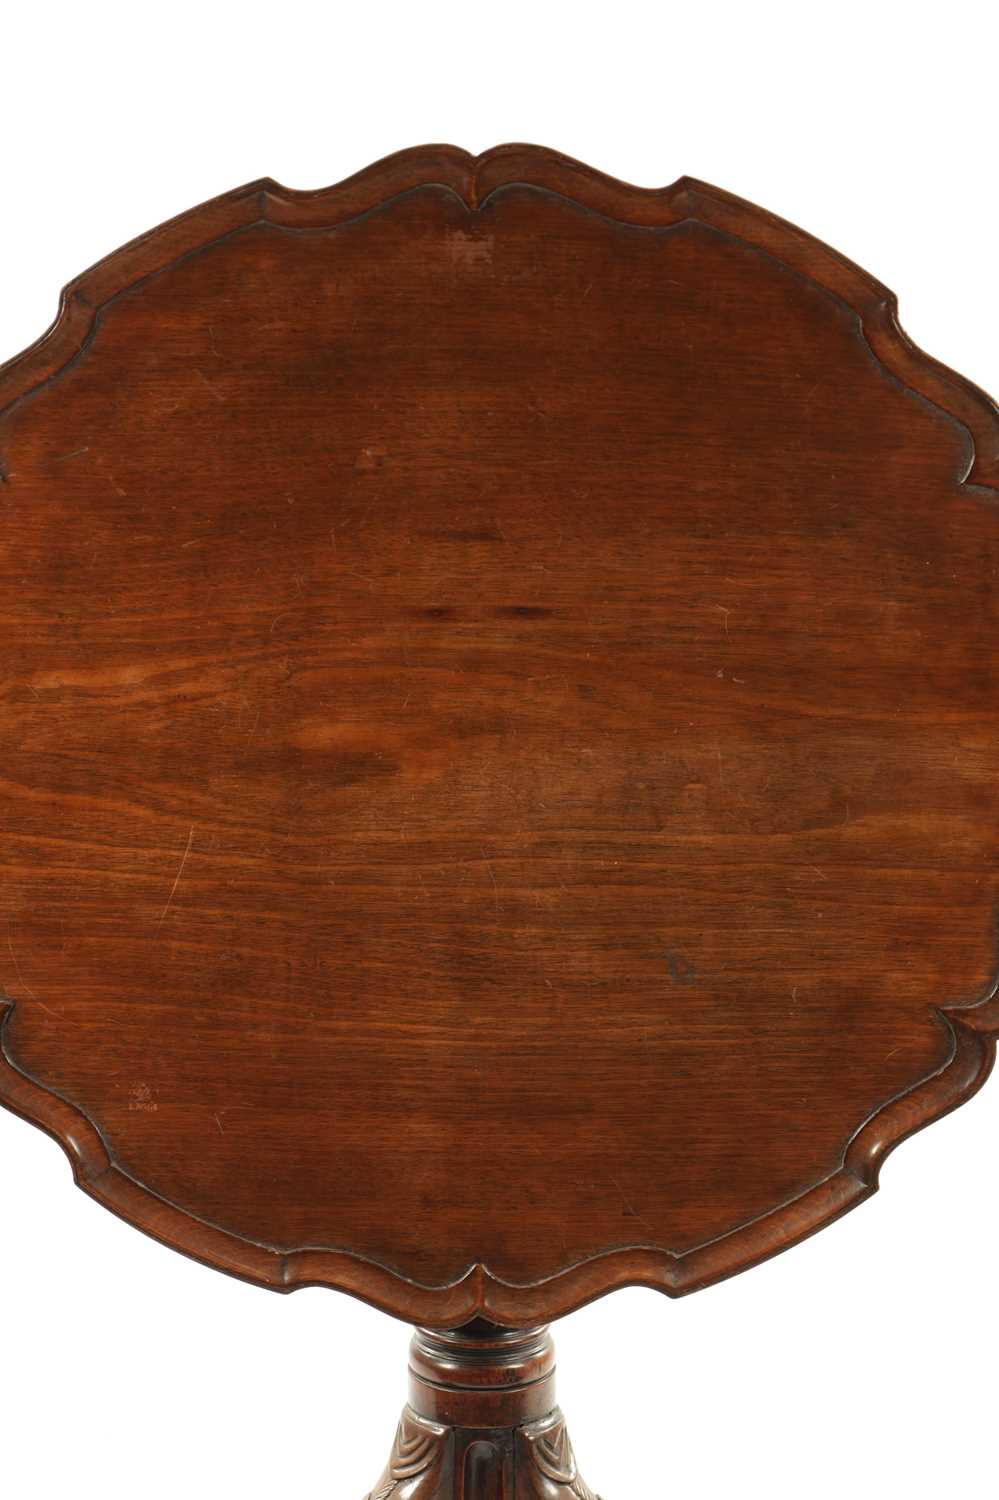 AN 18TH CENTURY FIGURED MAHOGANY PIE CRUST TRIPOD TABLE ON MANX FEET - Image 2 of 8